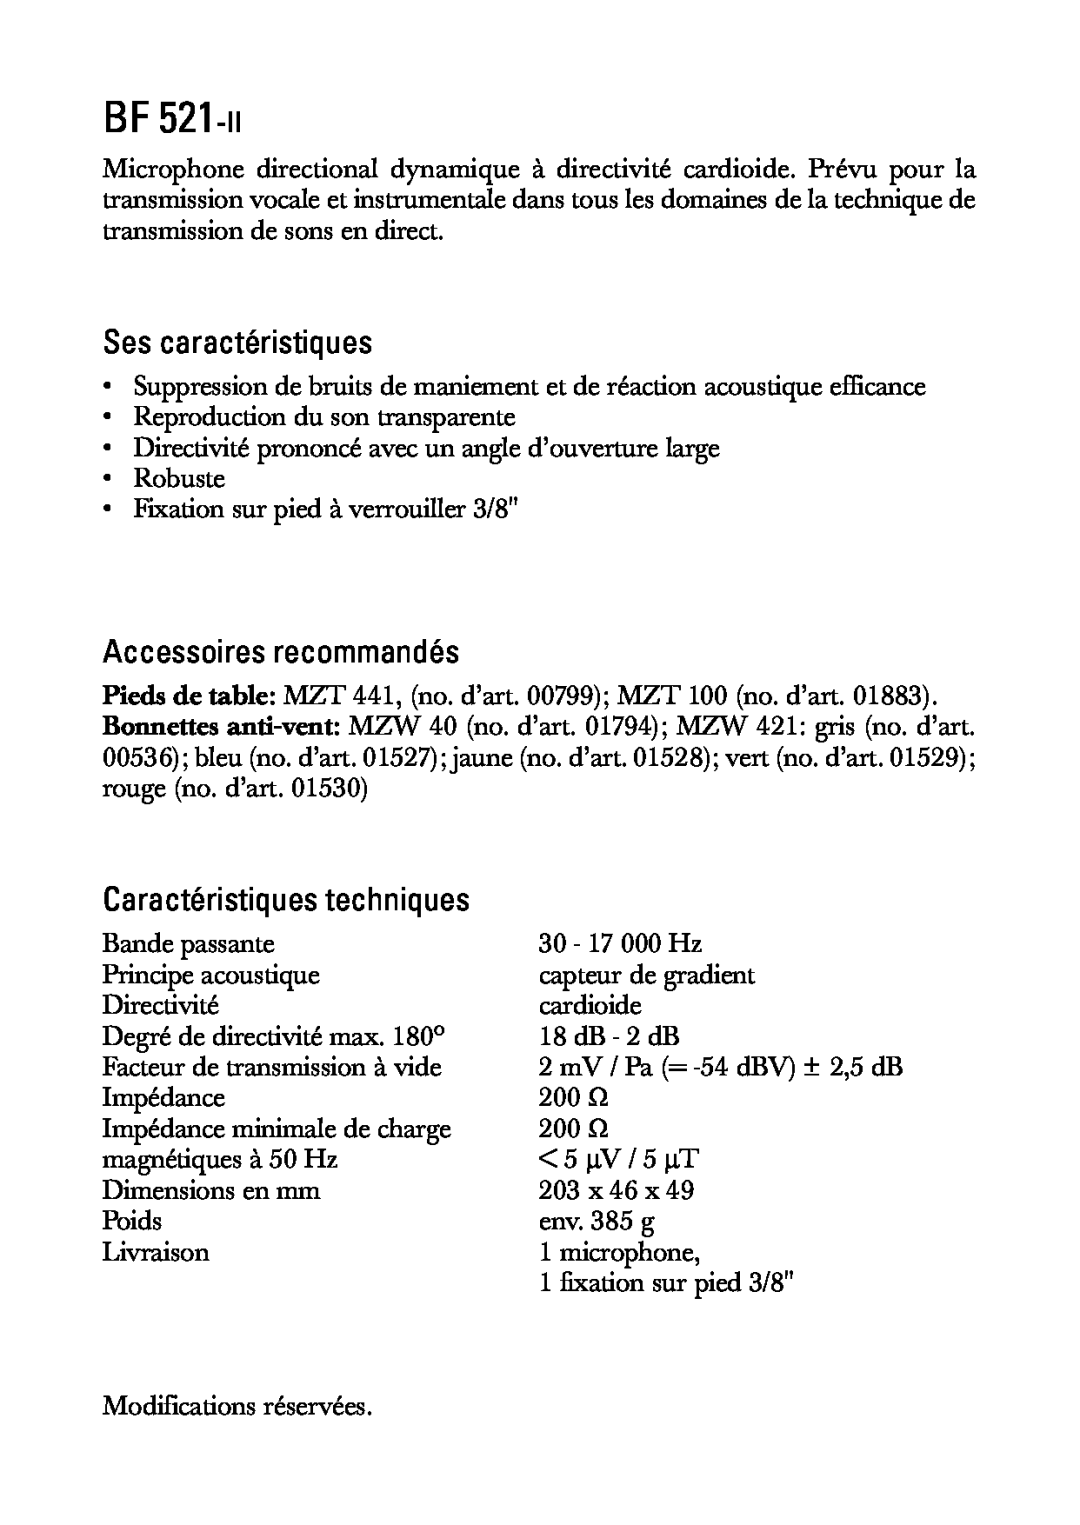 Sennheiser BF 521-II manual Ses caractéristiques, Accessoires recommandés, Caractéristiques techniques 